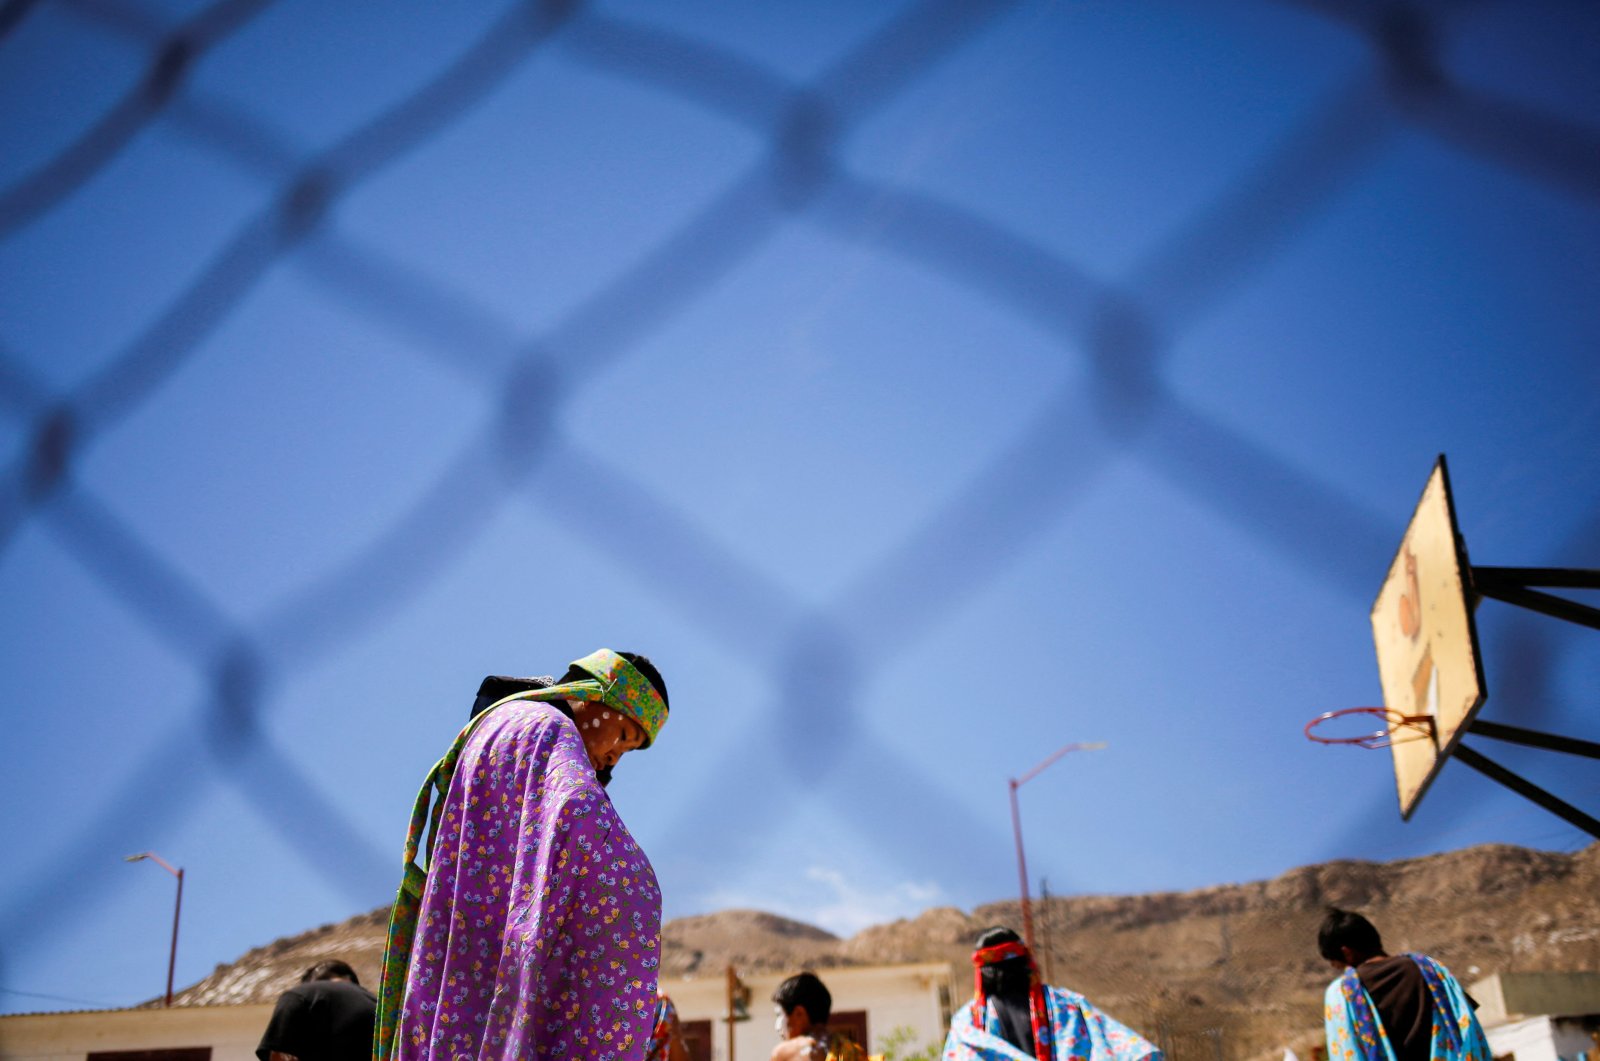 An indigenous Raramuri person participates in Good Friday celebrations in the Tarahumara neighborhood of Ciudad Juarez, Mexico, April 15, 2022. (REUTERS)